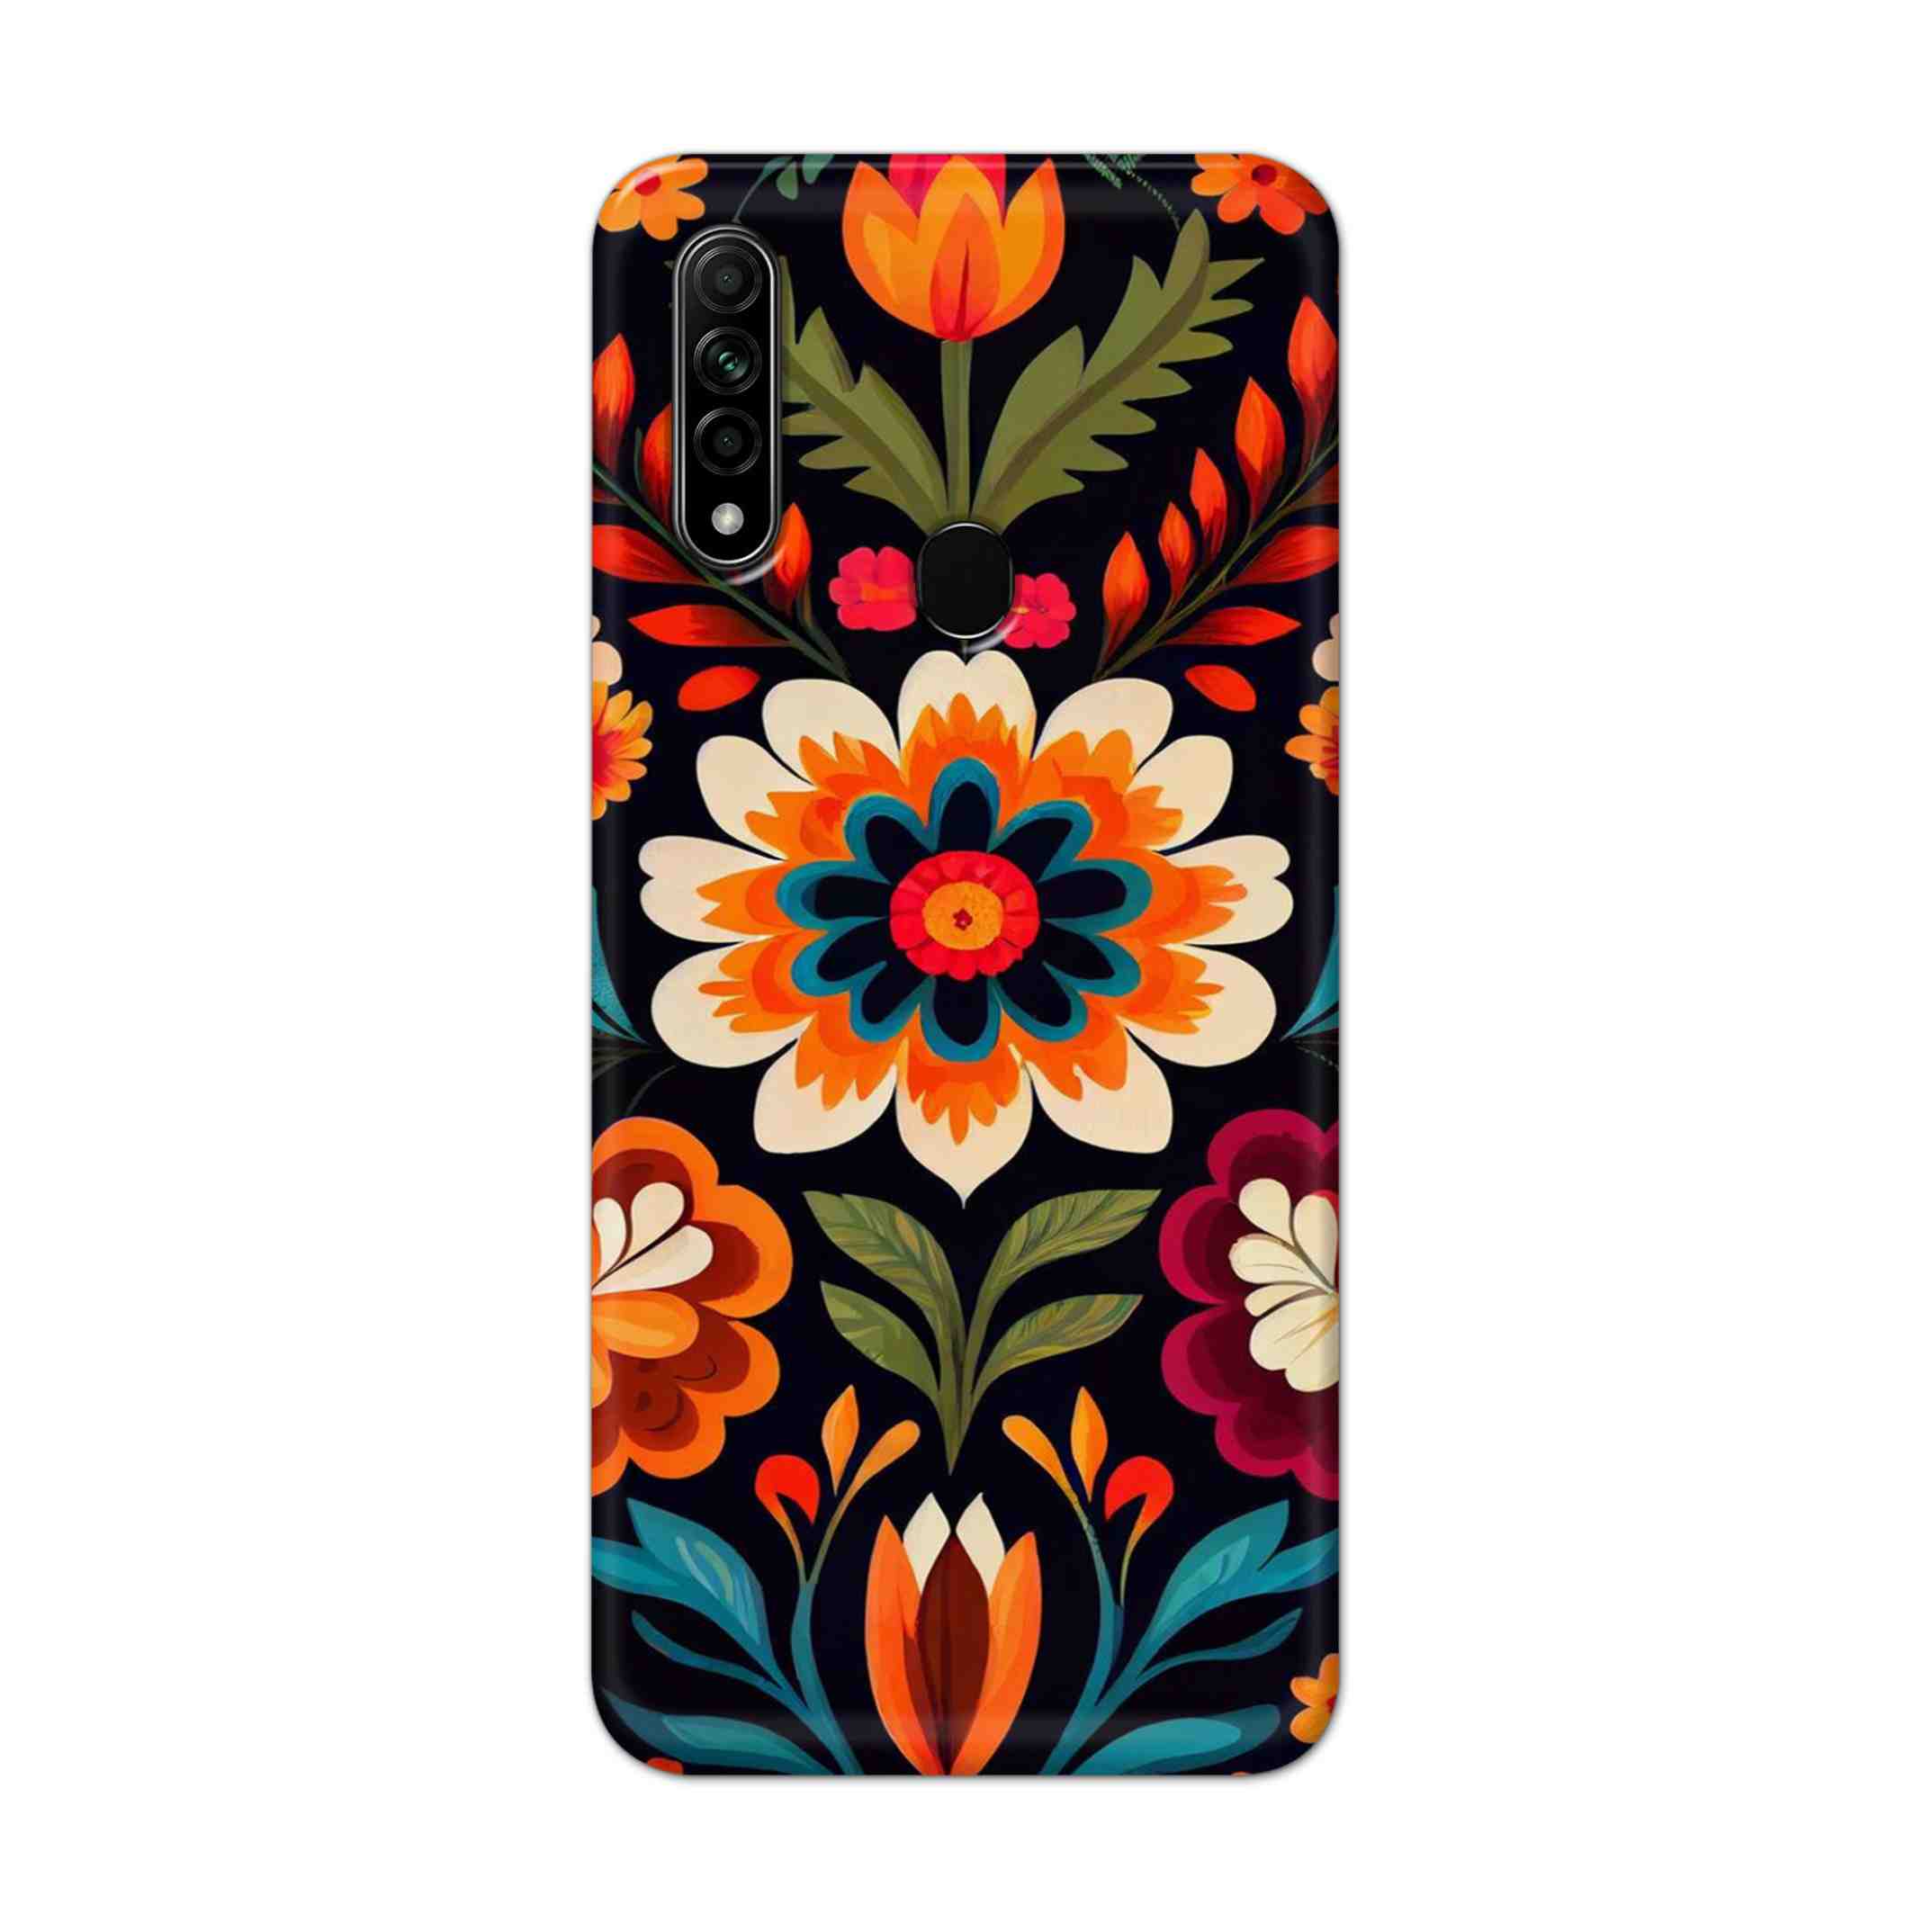 Buy Flower Hard Back Mobile Phone Case Cover For Oppo A31 (2020) Online